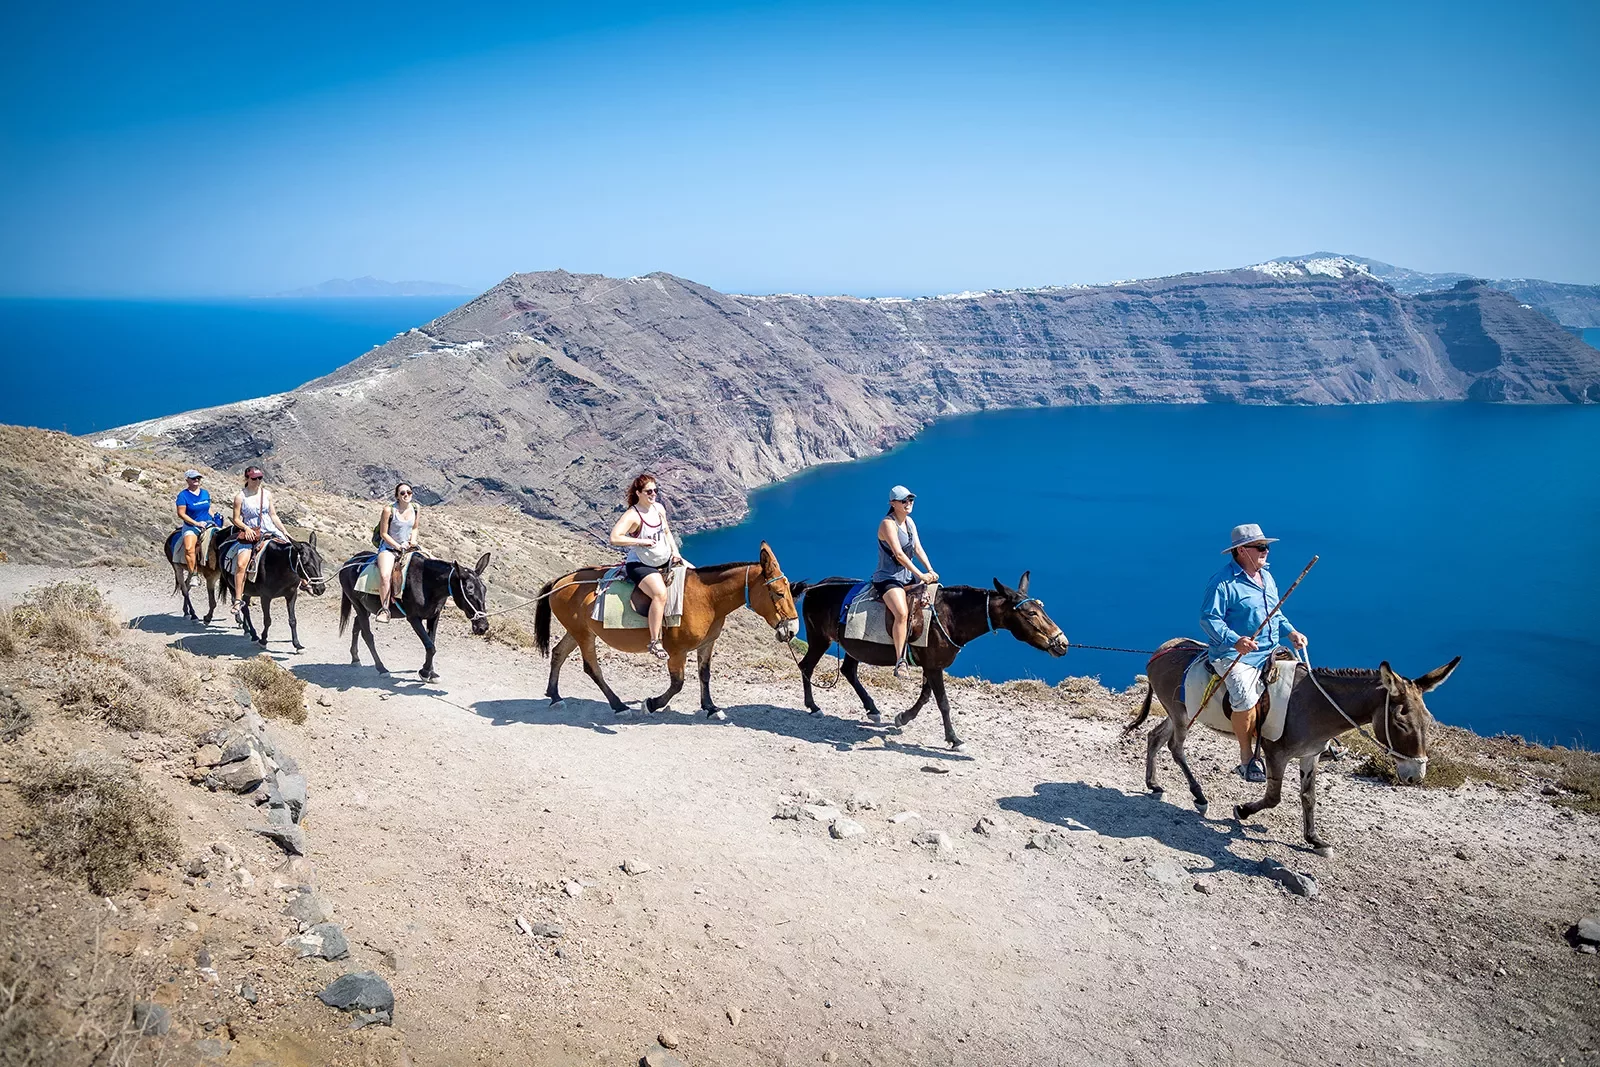 Group of guest on horseback, walking along arid cliffside, ocean below.